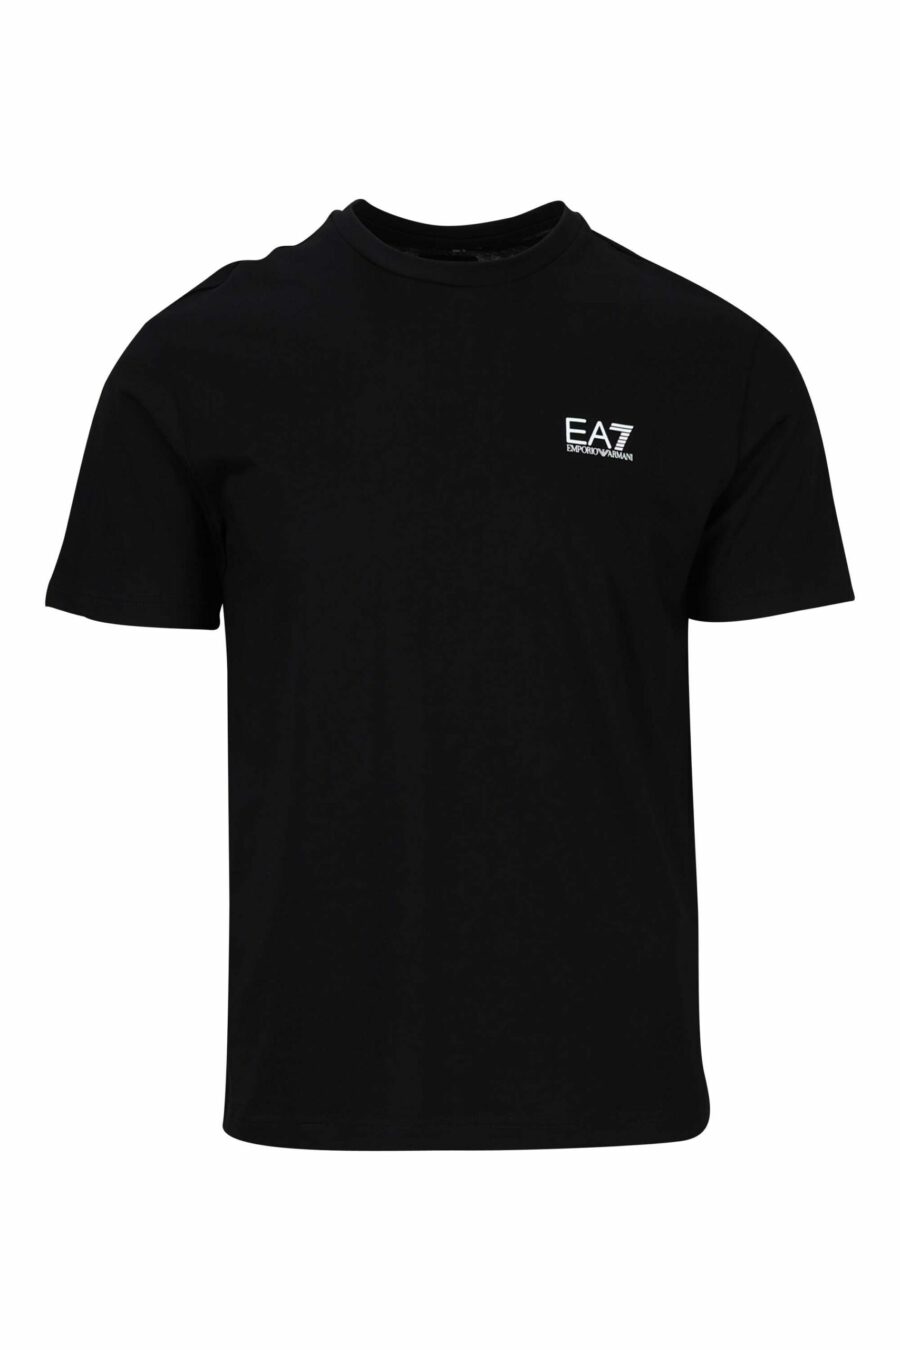 Camiseta negra con maxilogo "lux identity" vertical detrás - 8058947452668 scaled